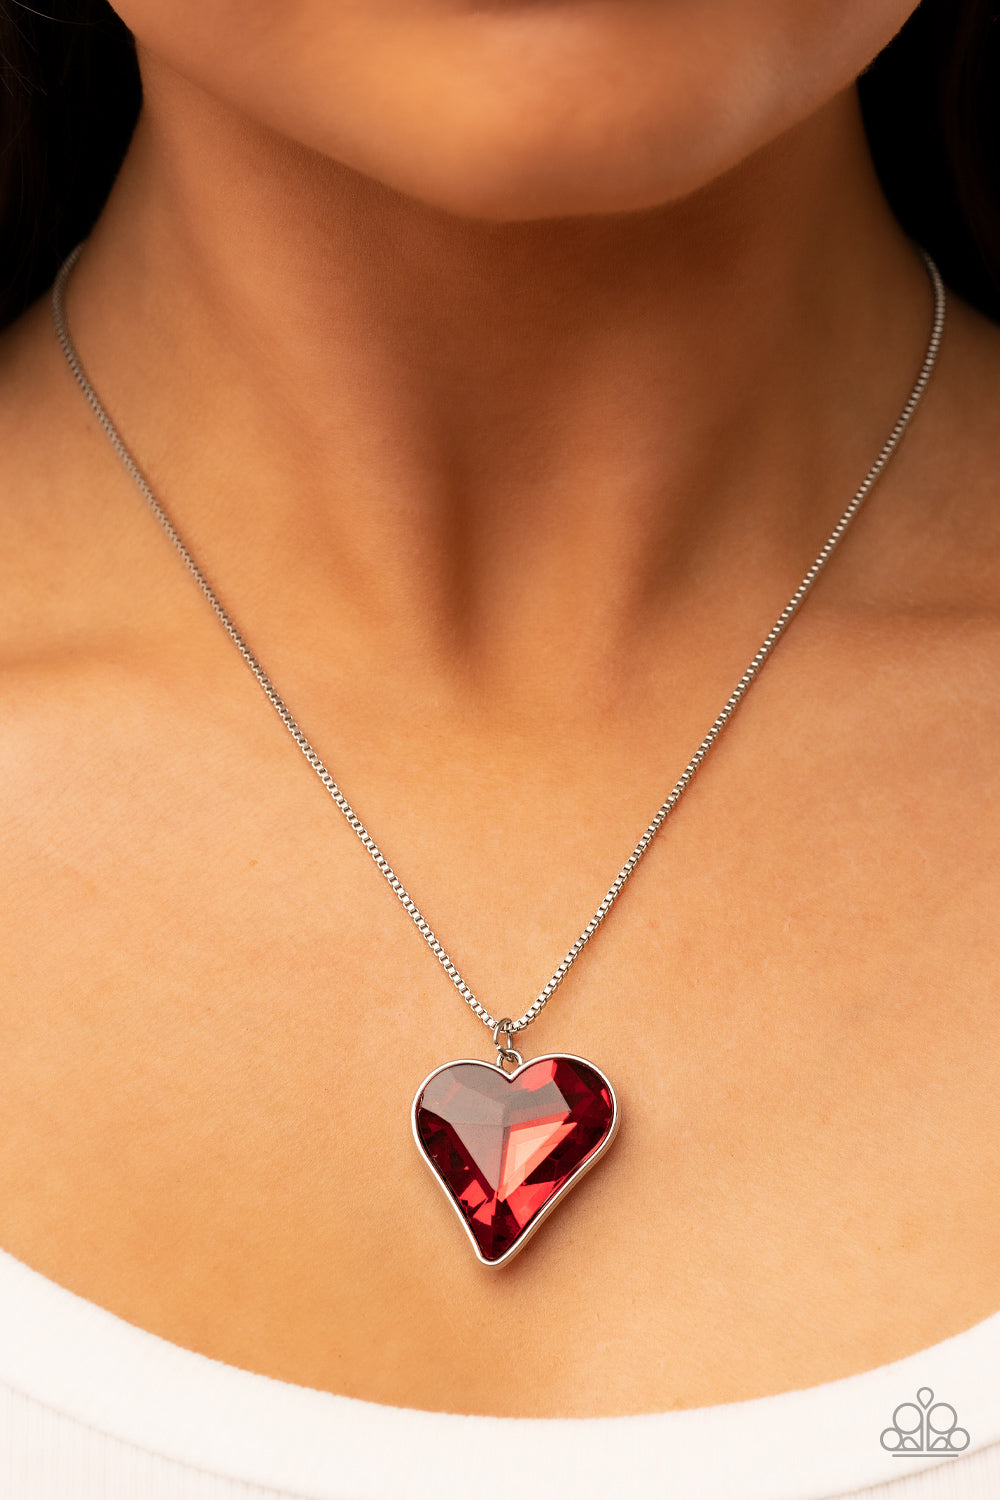 Lockdown My Heart - Red Necklace Paparazzi Accessories Valentine $5 Jewelry